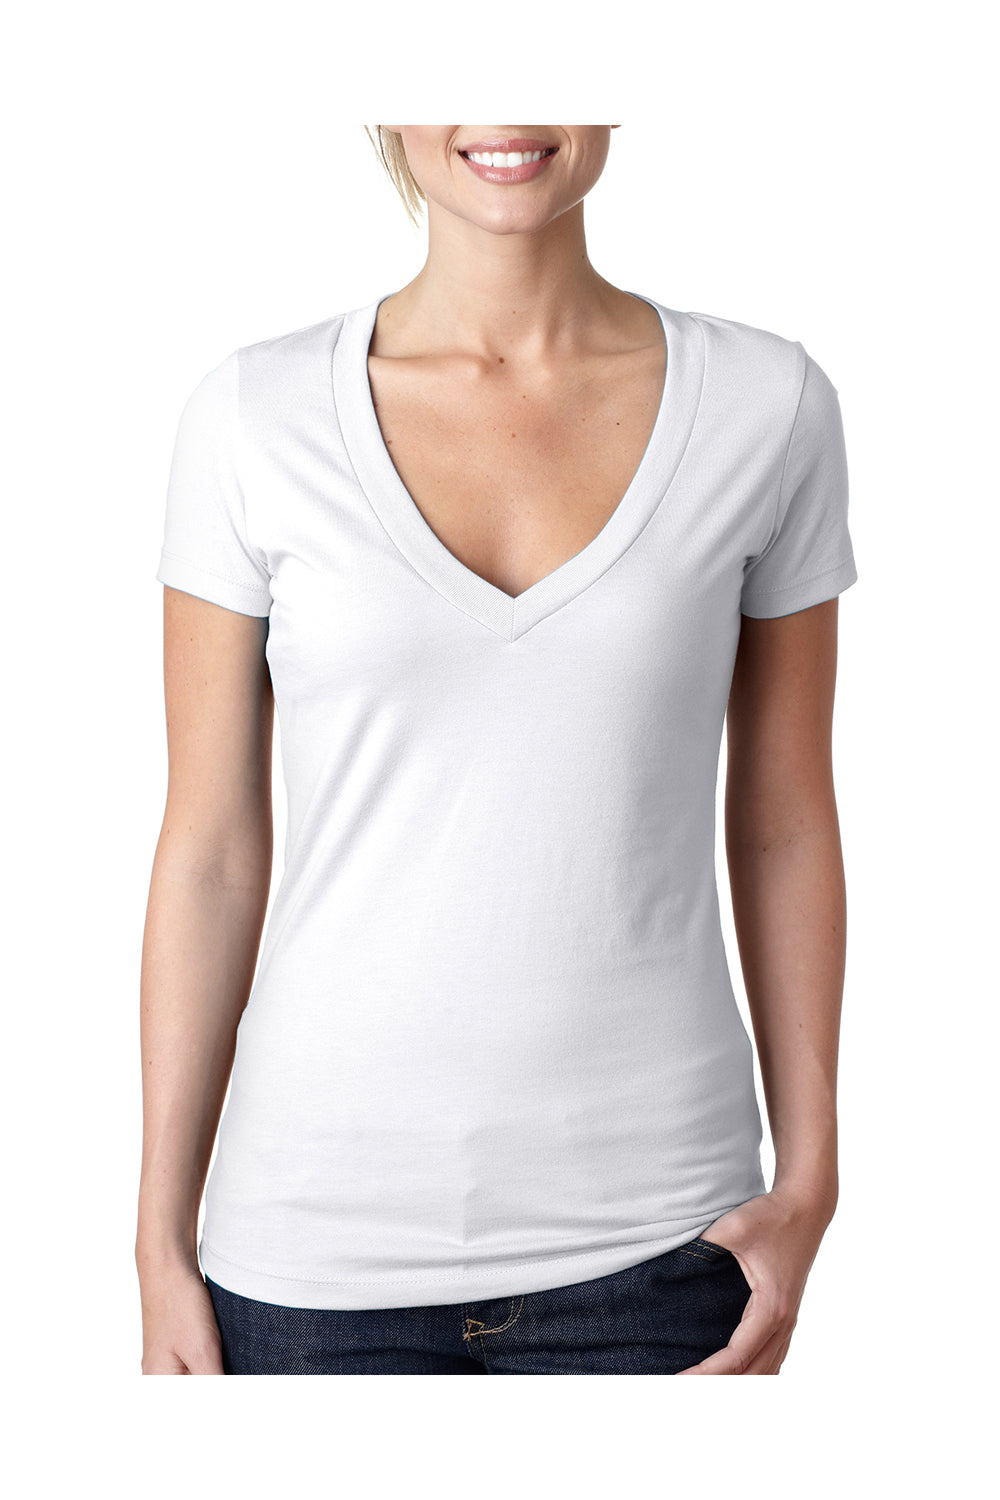 Next Level 6640 Womens CVC Jersey Short Sleeve V-Neck T-Shirt White Front